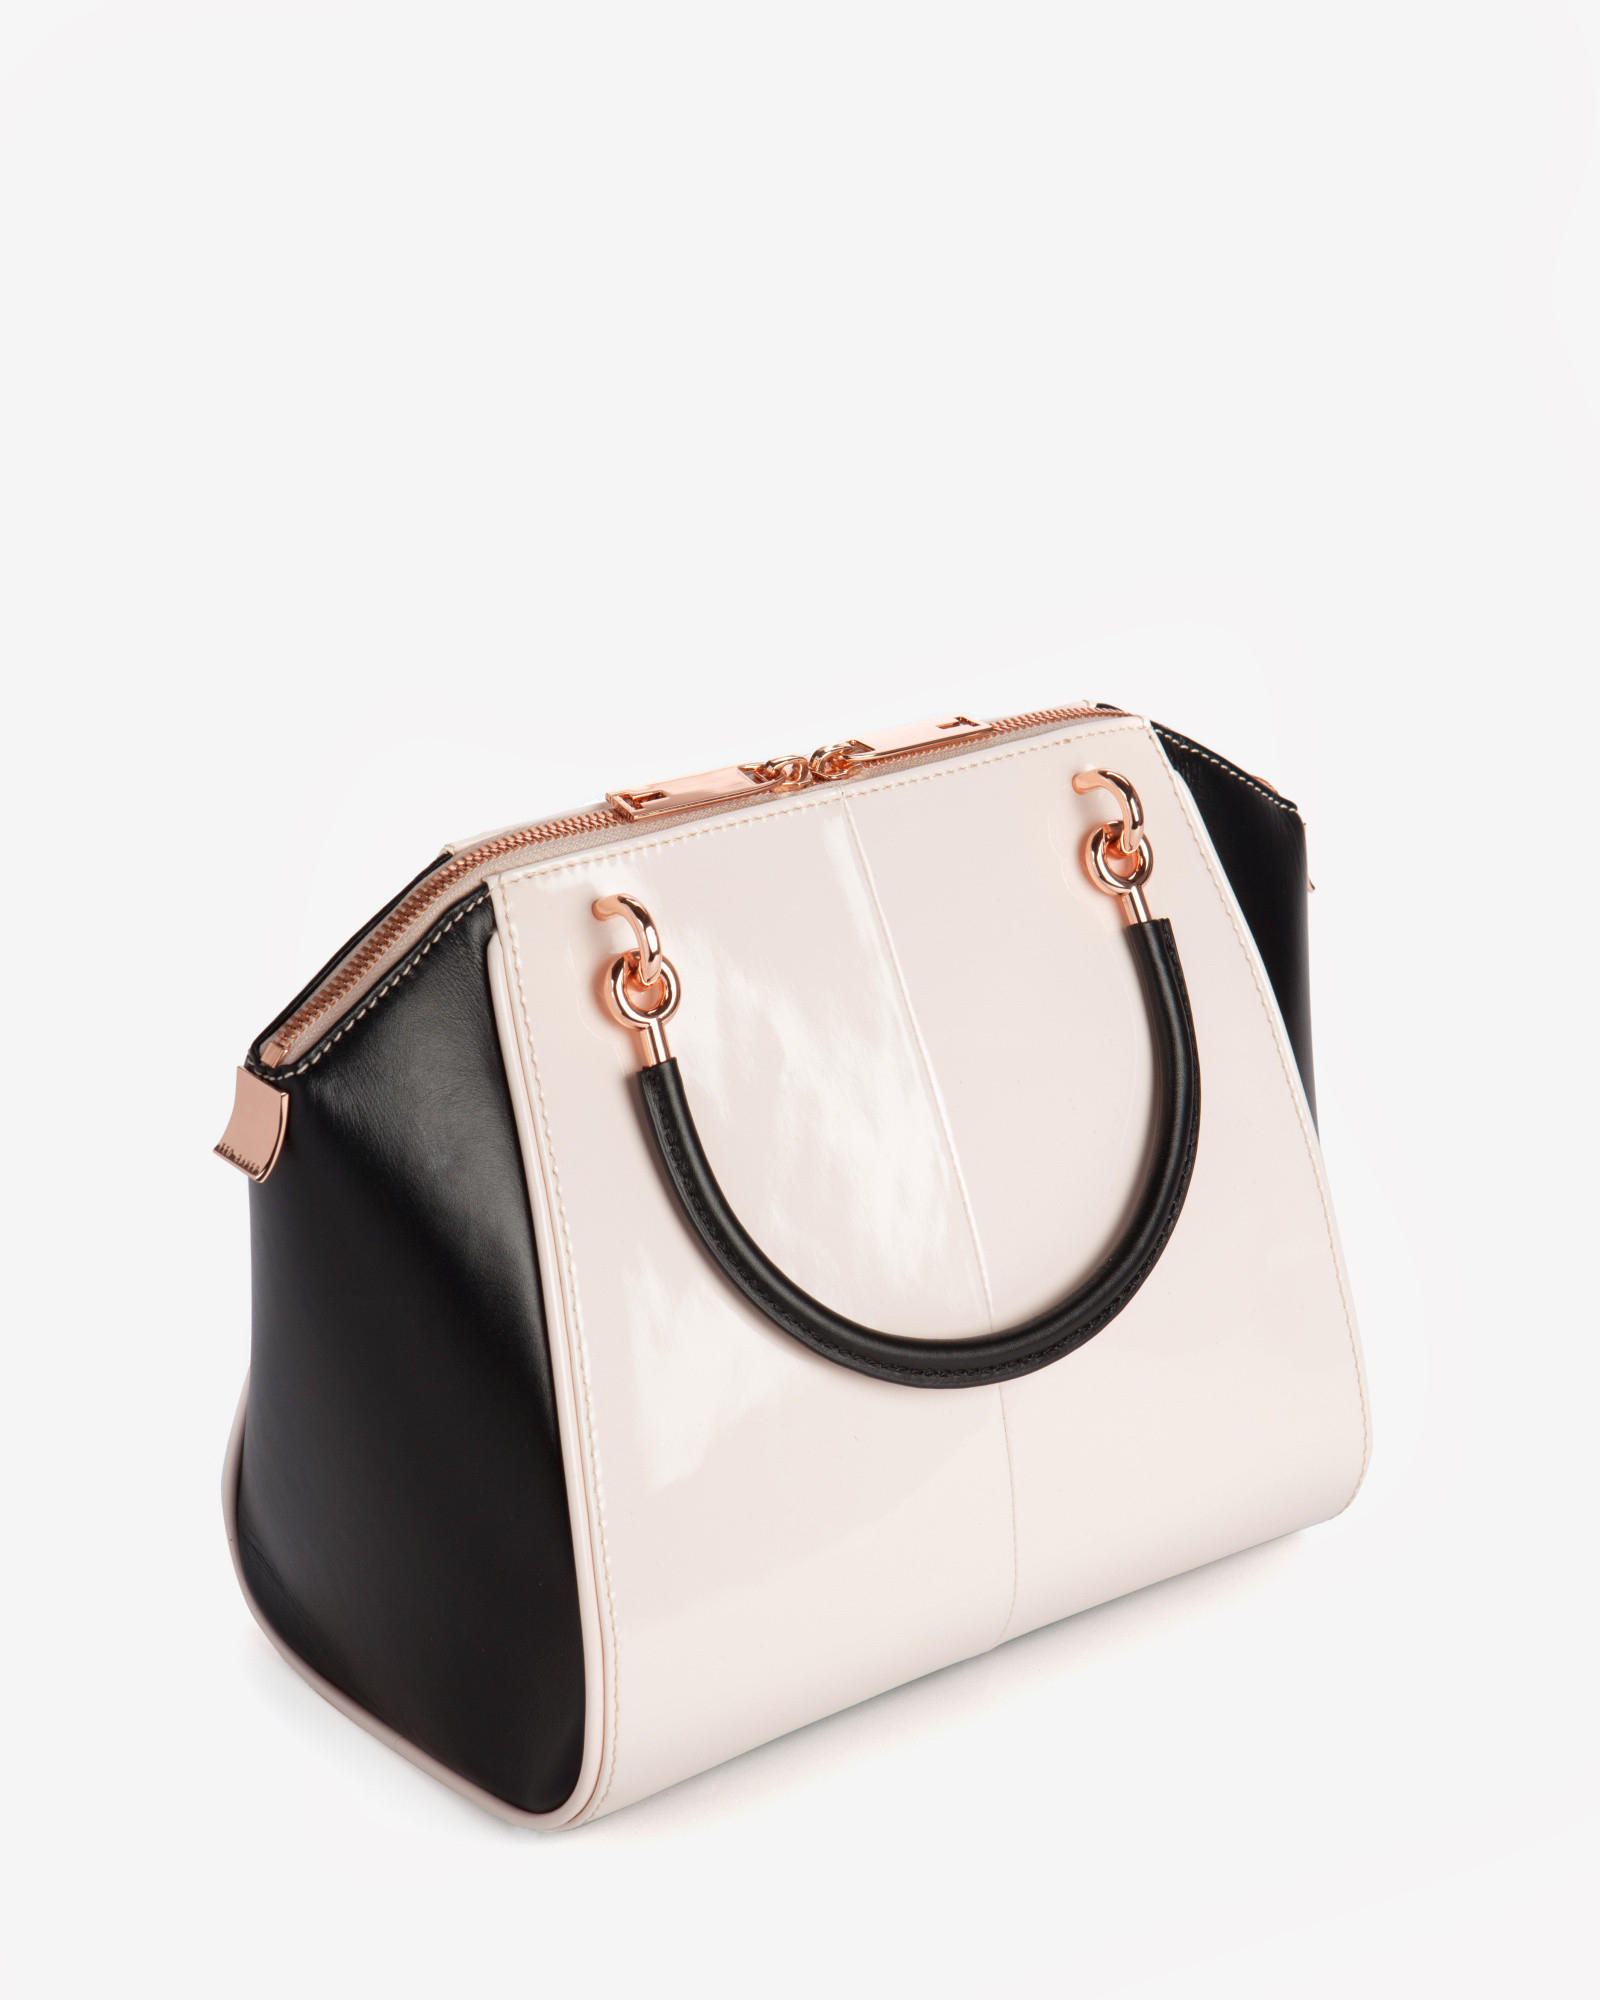 Handbags | Tote Bags & Cross Body Styles | Dorothy Perkins